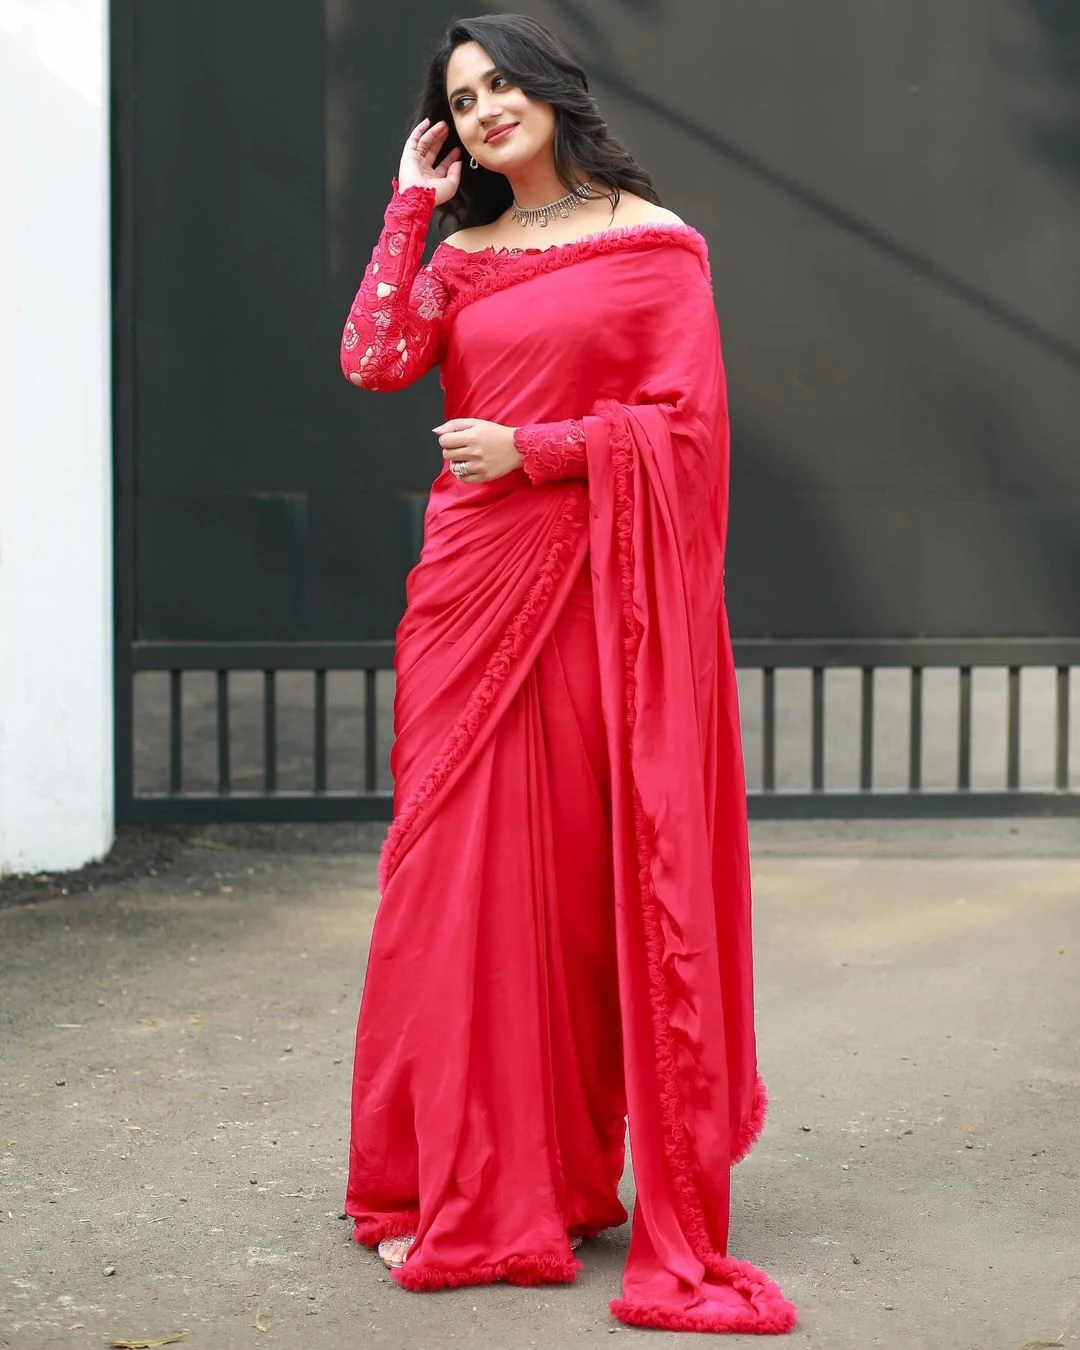 Actress Miya George cute looks in red saree photoshoot